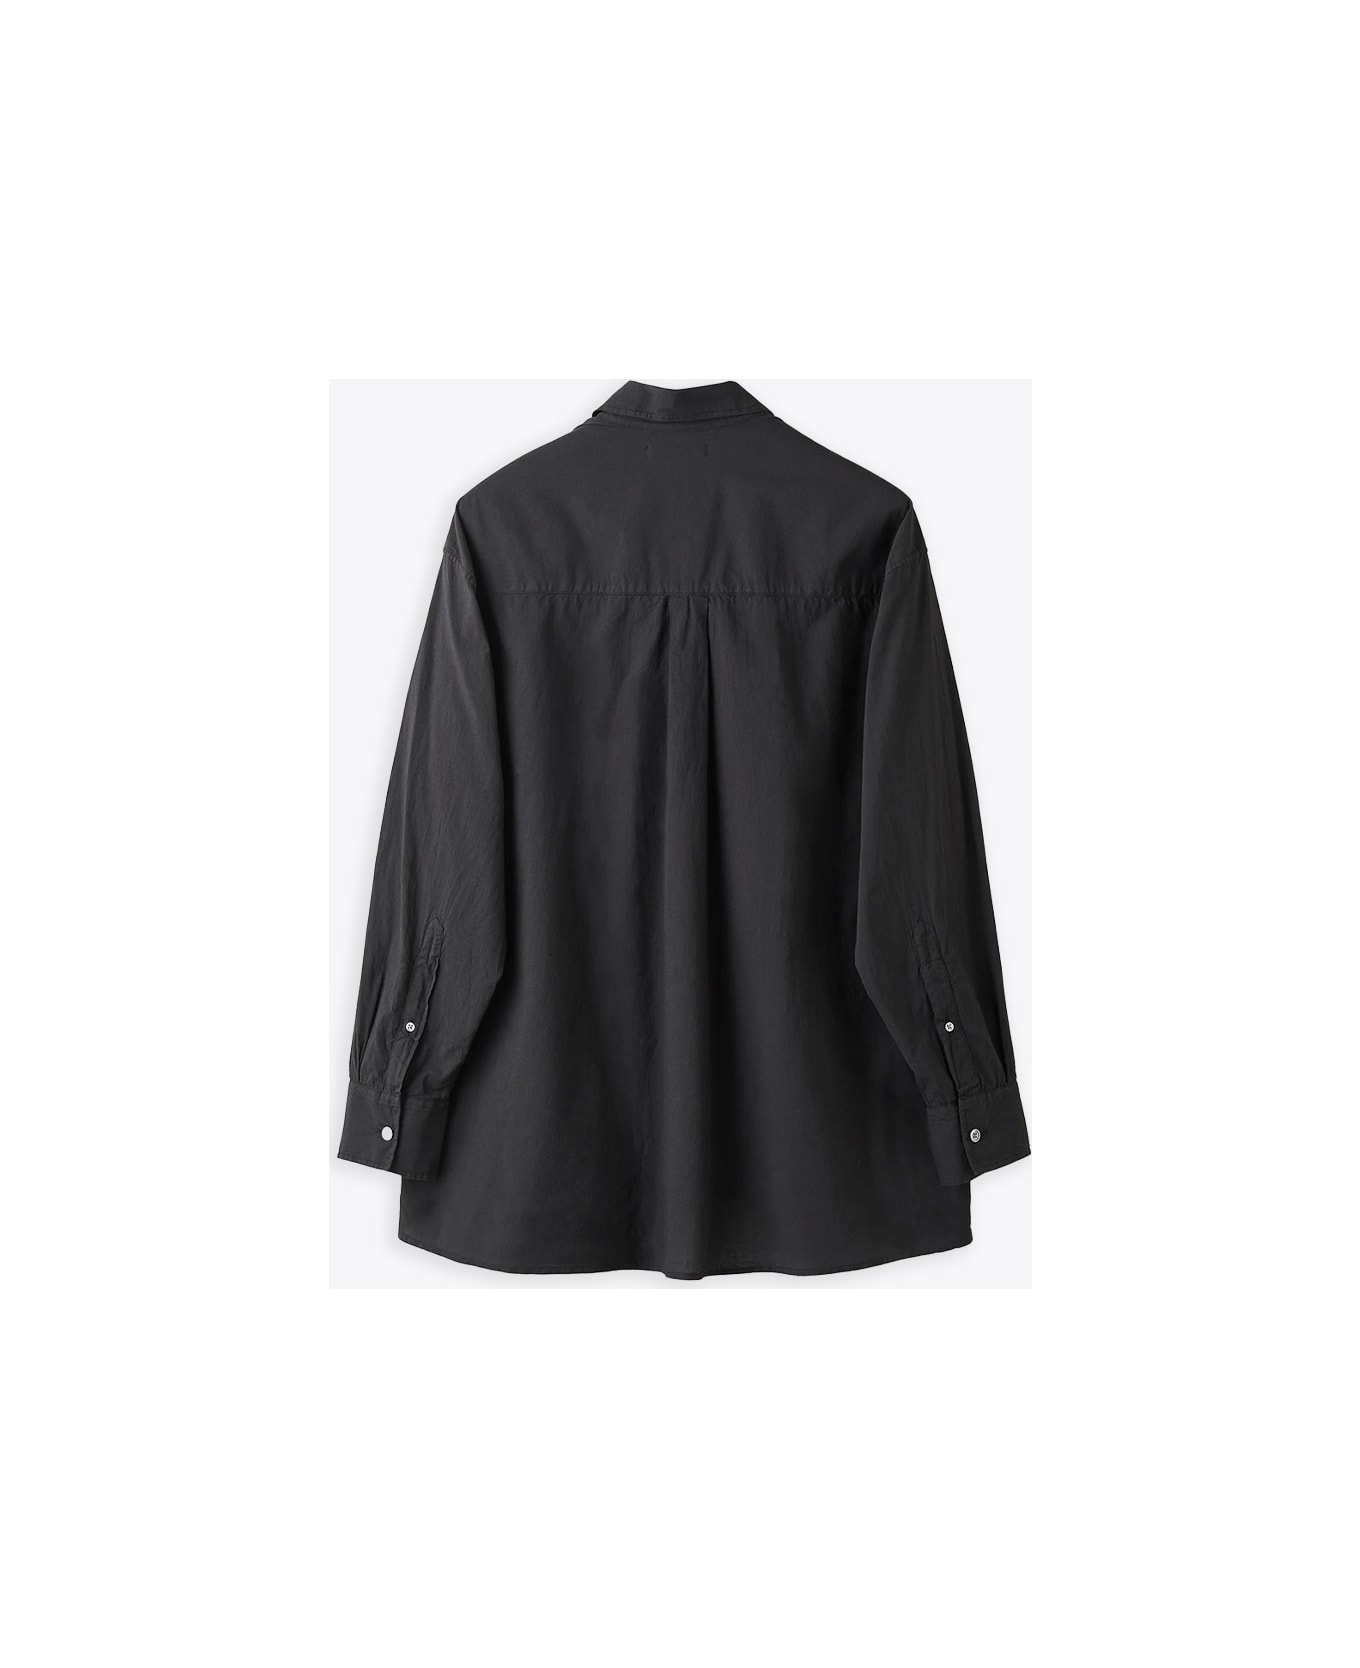 Our Legacy Borrowed Bd Shirt Black cotton voile button-down shirt - Borrowed BD shirt - Nero シャツ